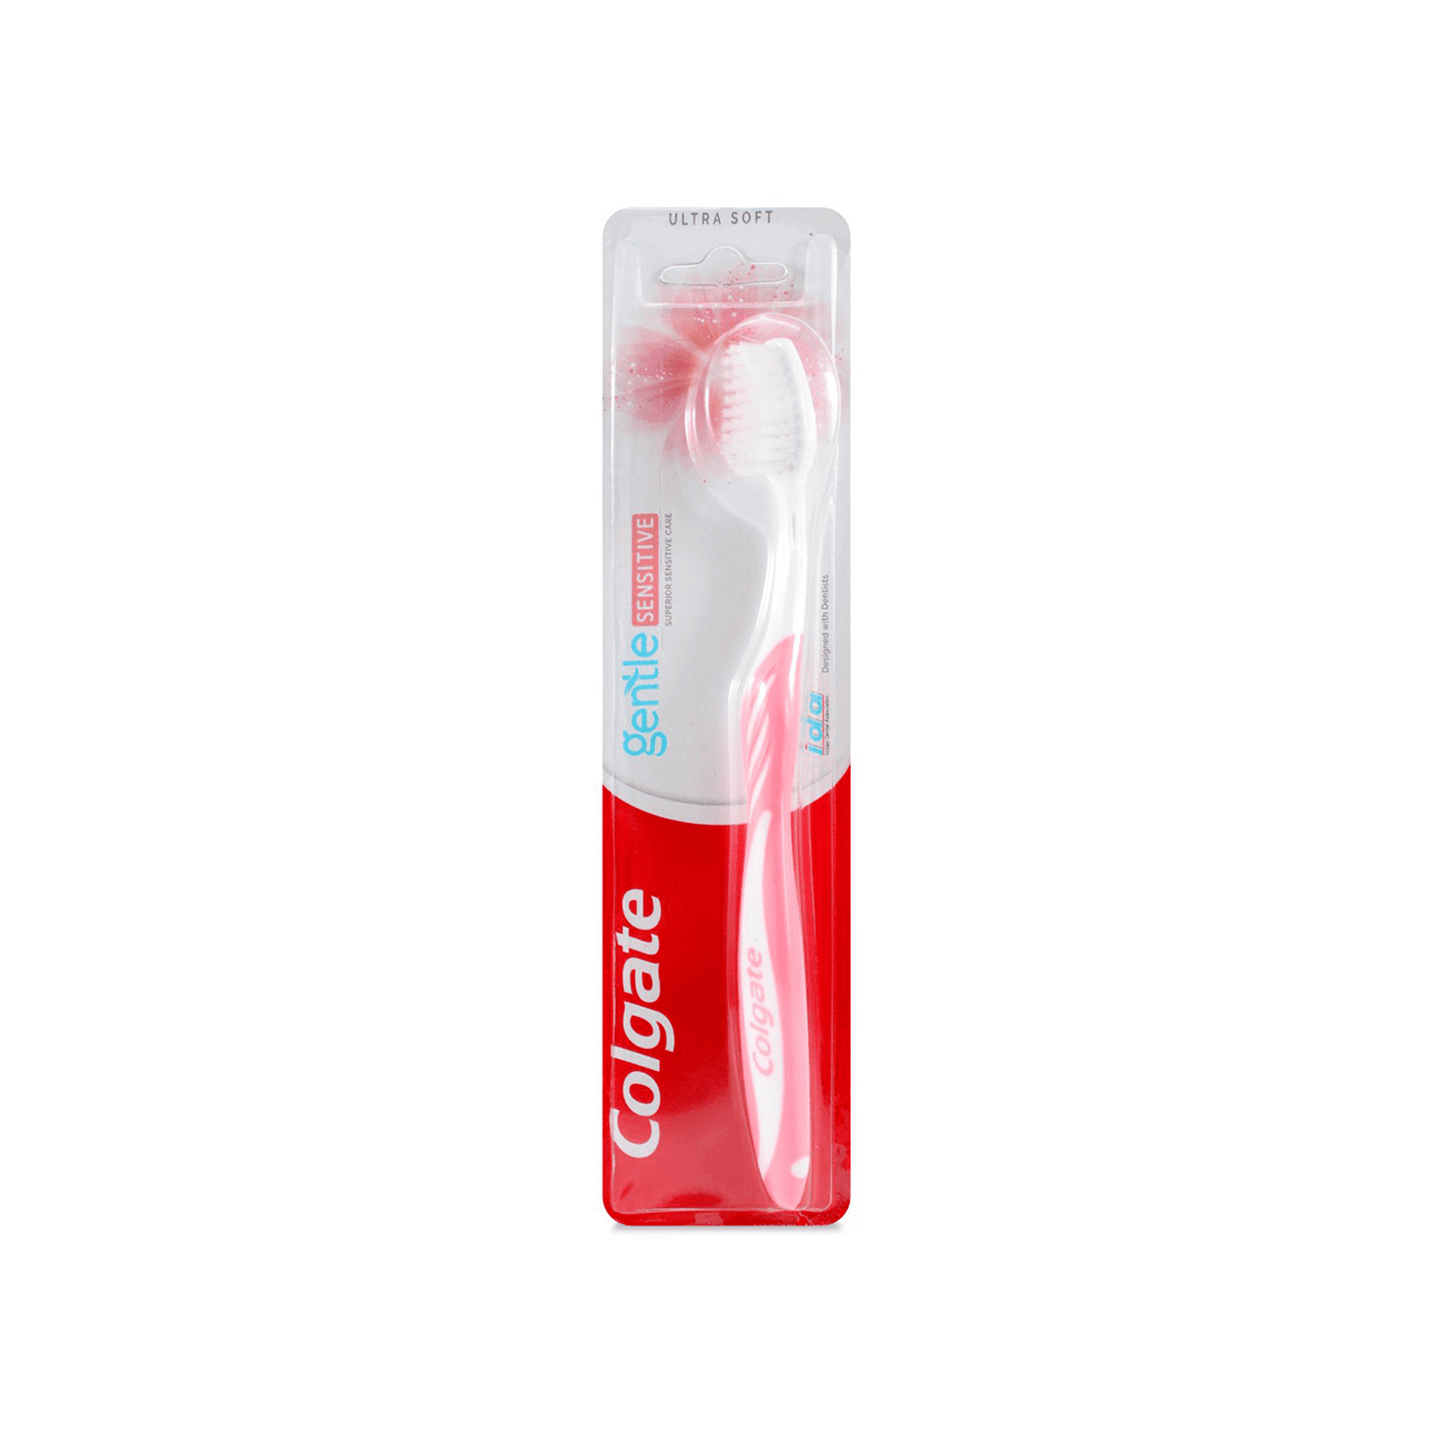 Colgate Gentle Sensitive Tooth Brush.